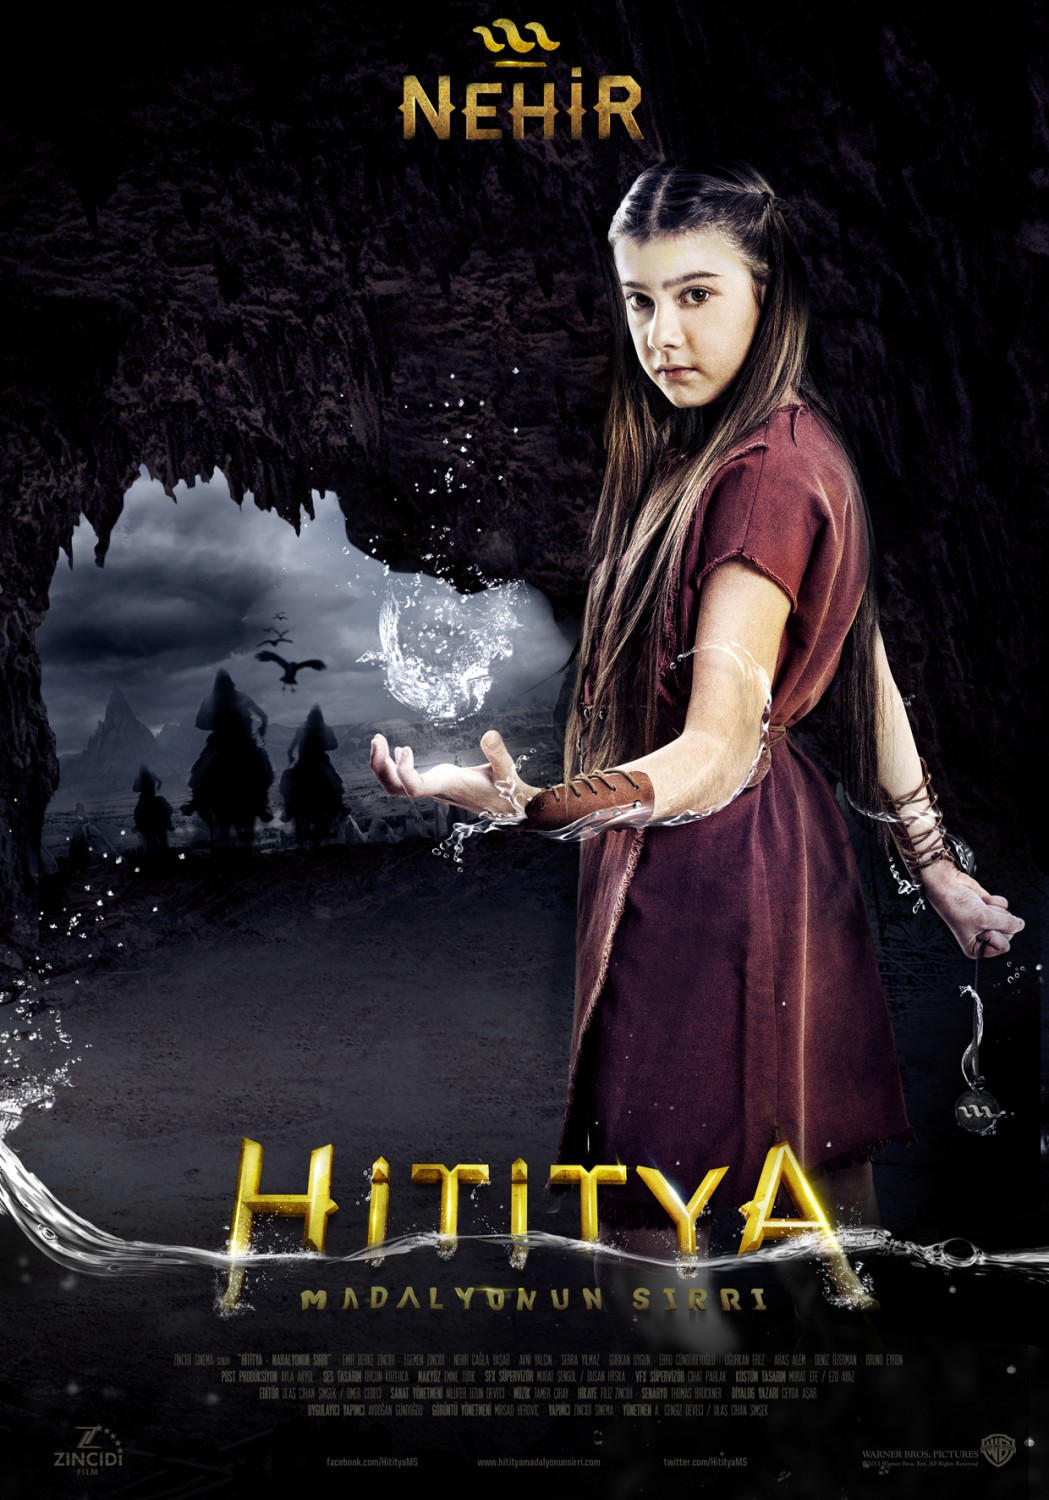 Extra Large Movie Poster Image for Hititya Madalyonun Sirri (#3 of 6)